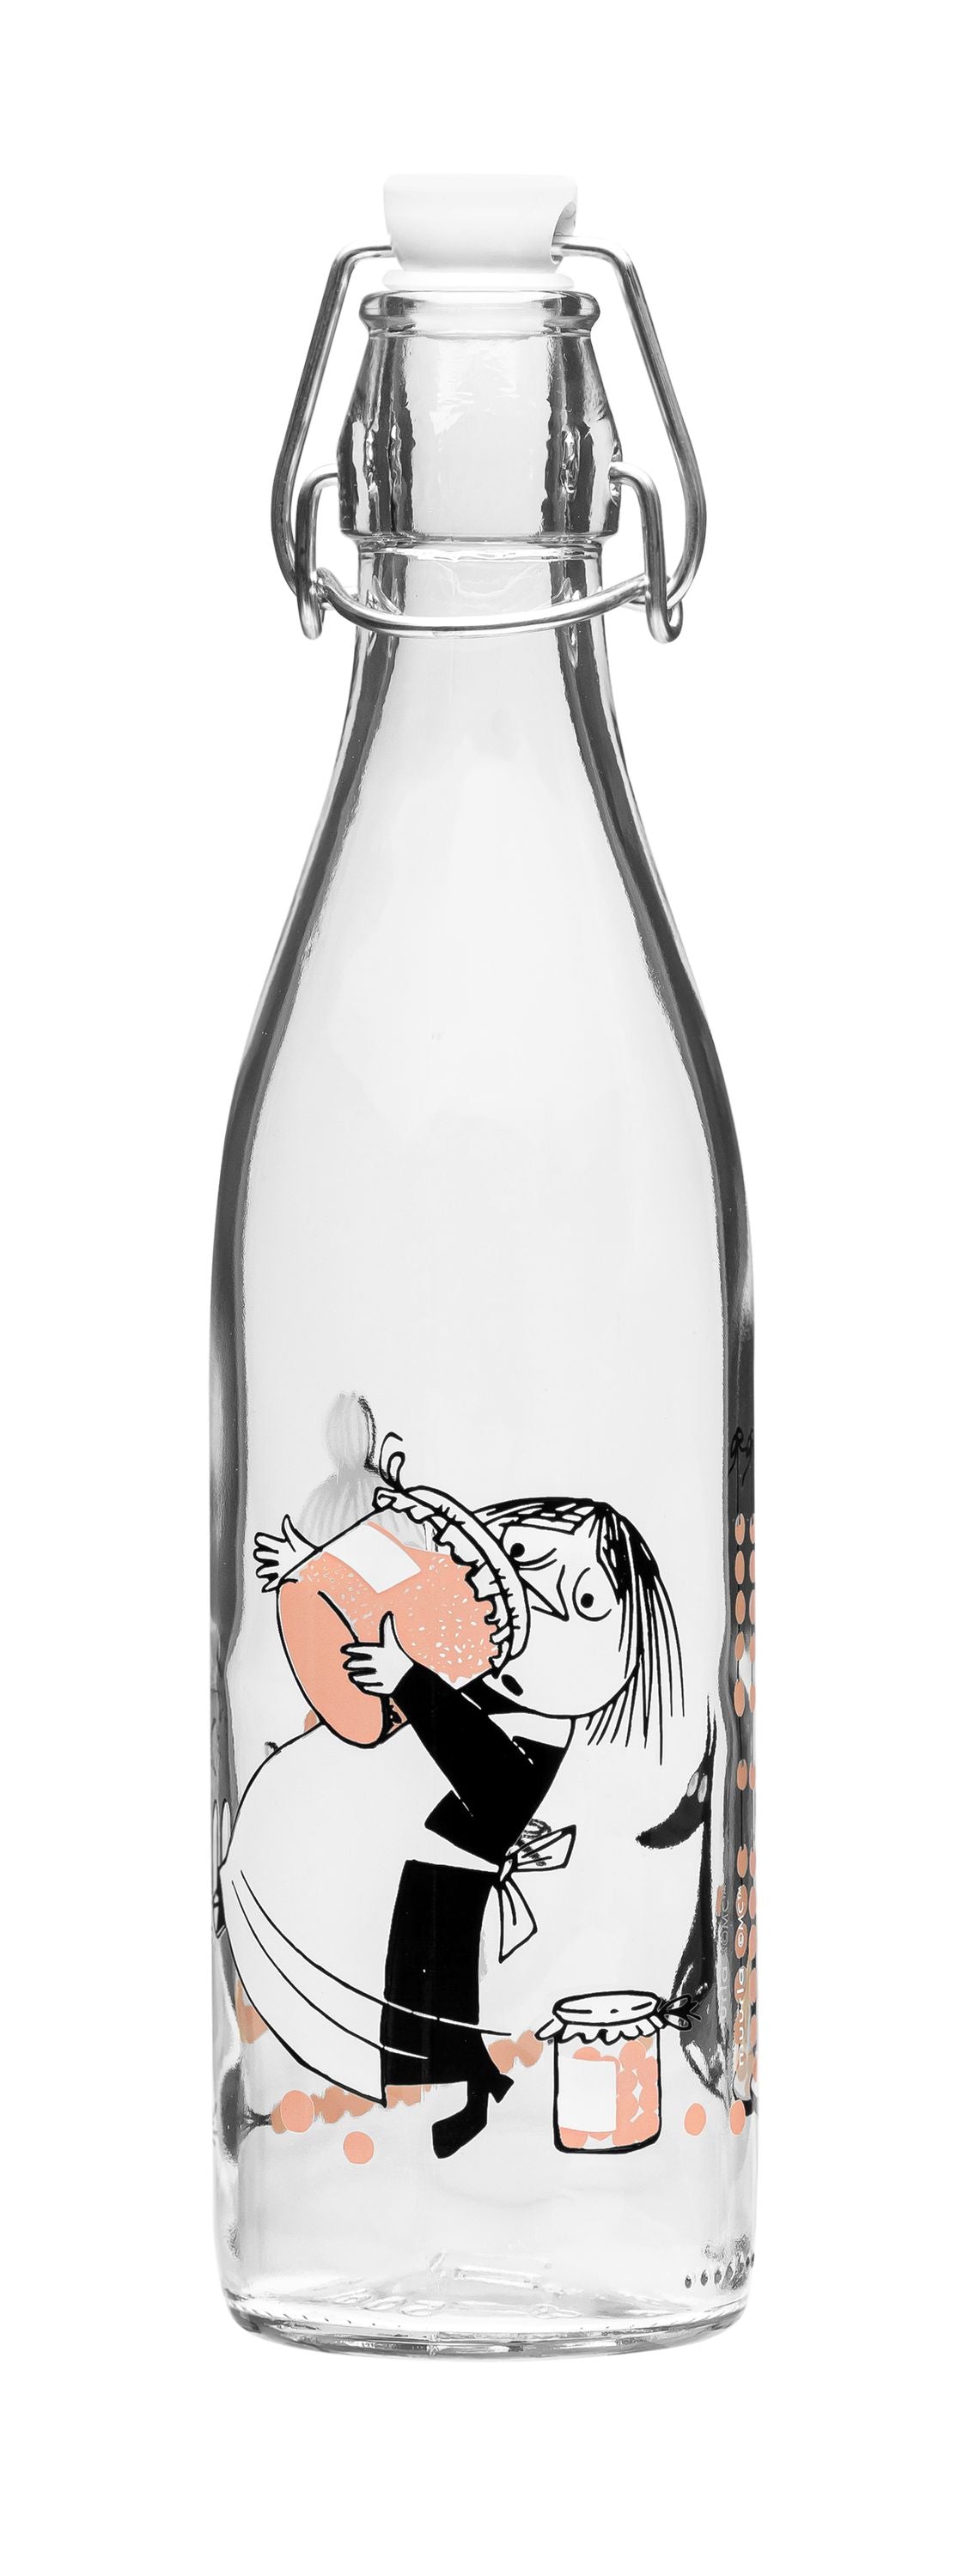 Muurla Moomin glazen fles, marmelade